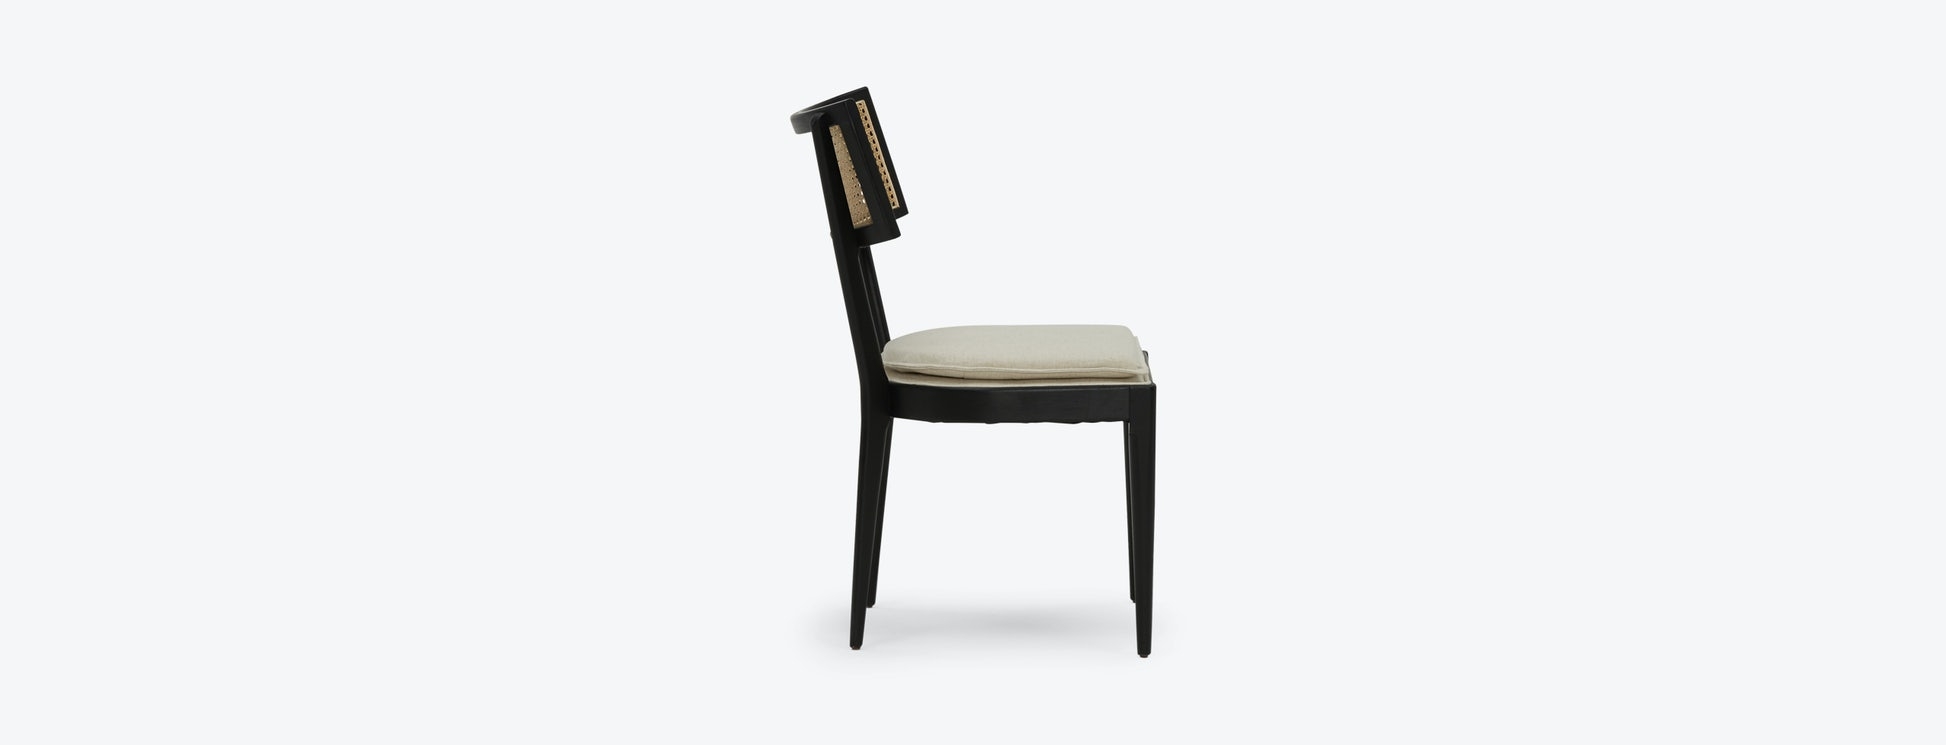 Errol Dining Chair - Image 2